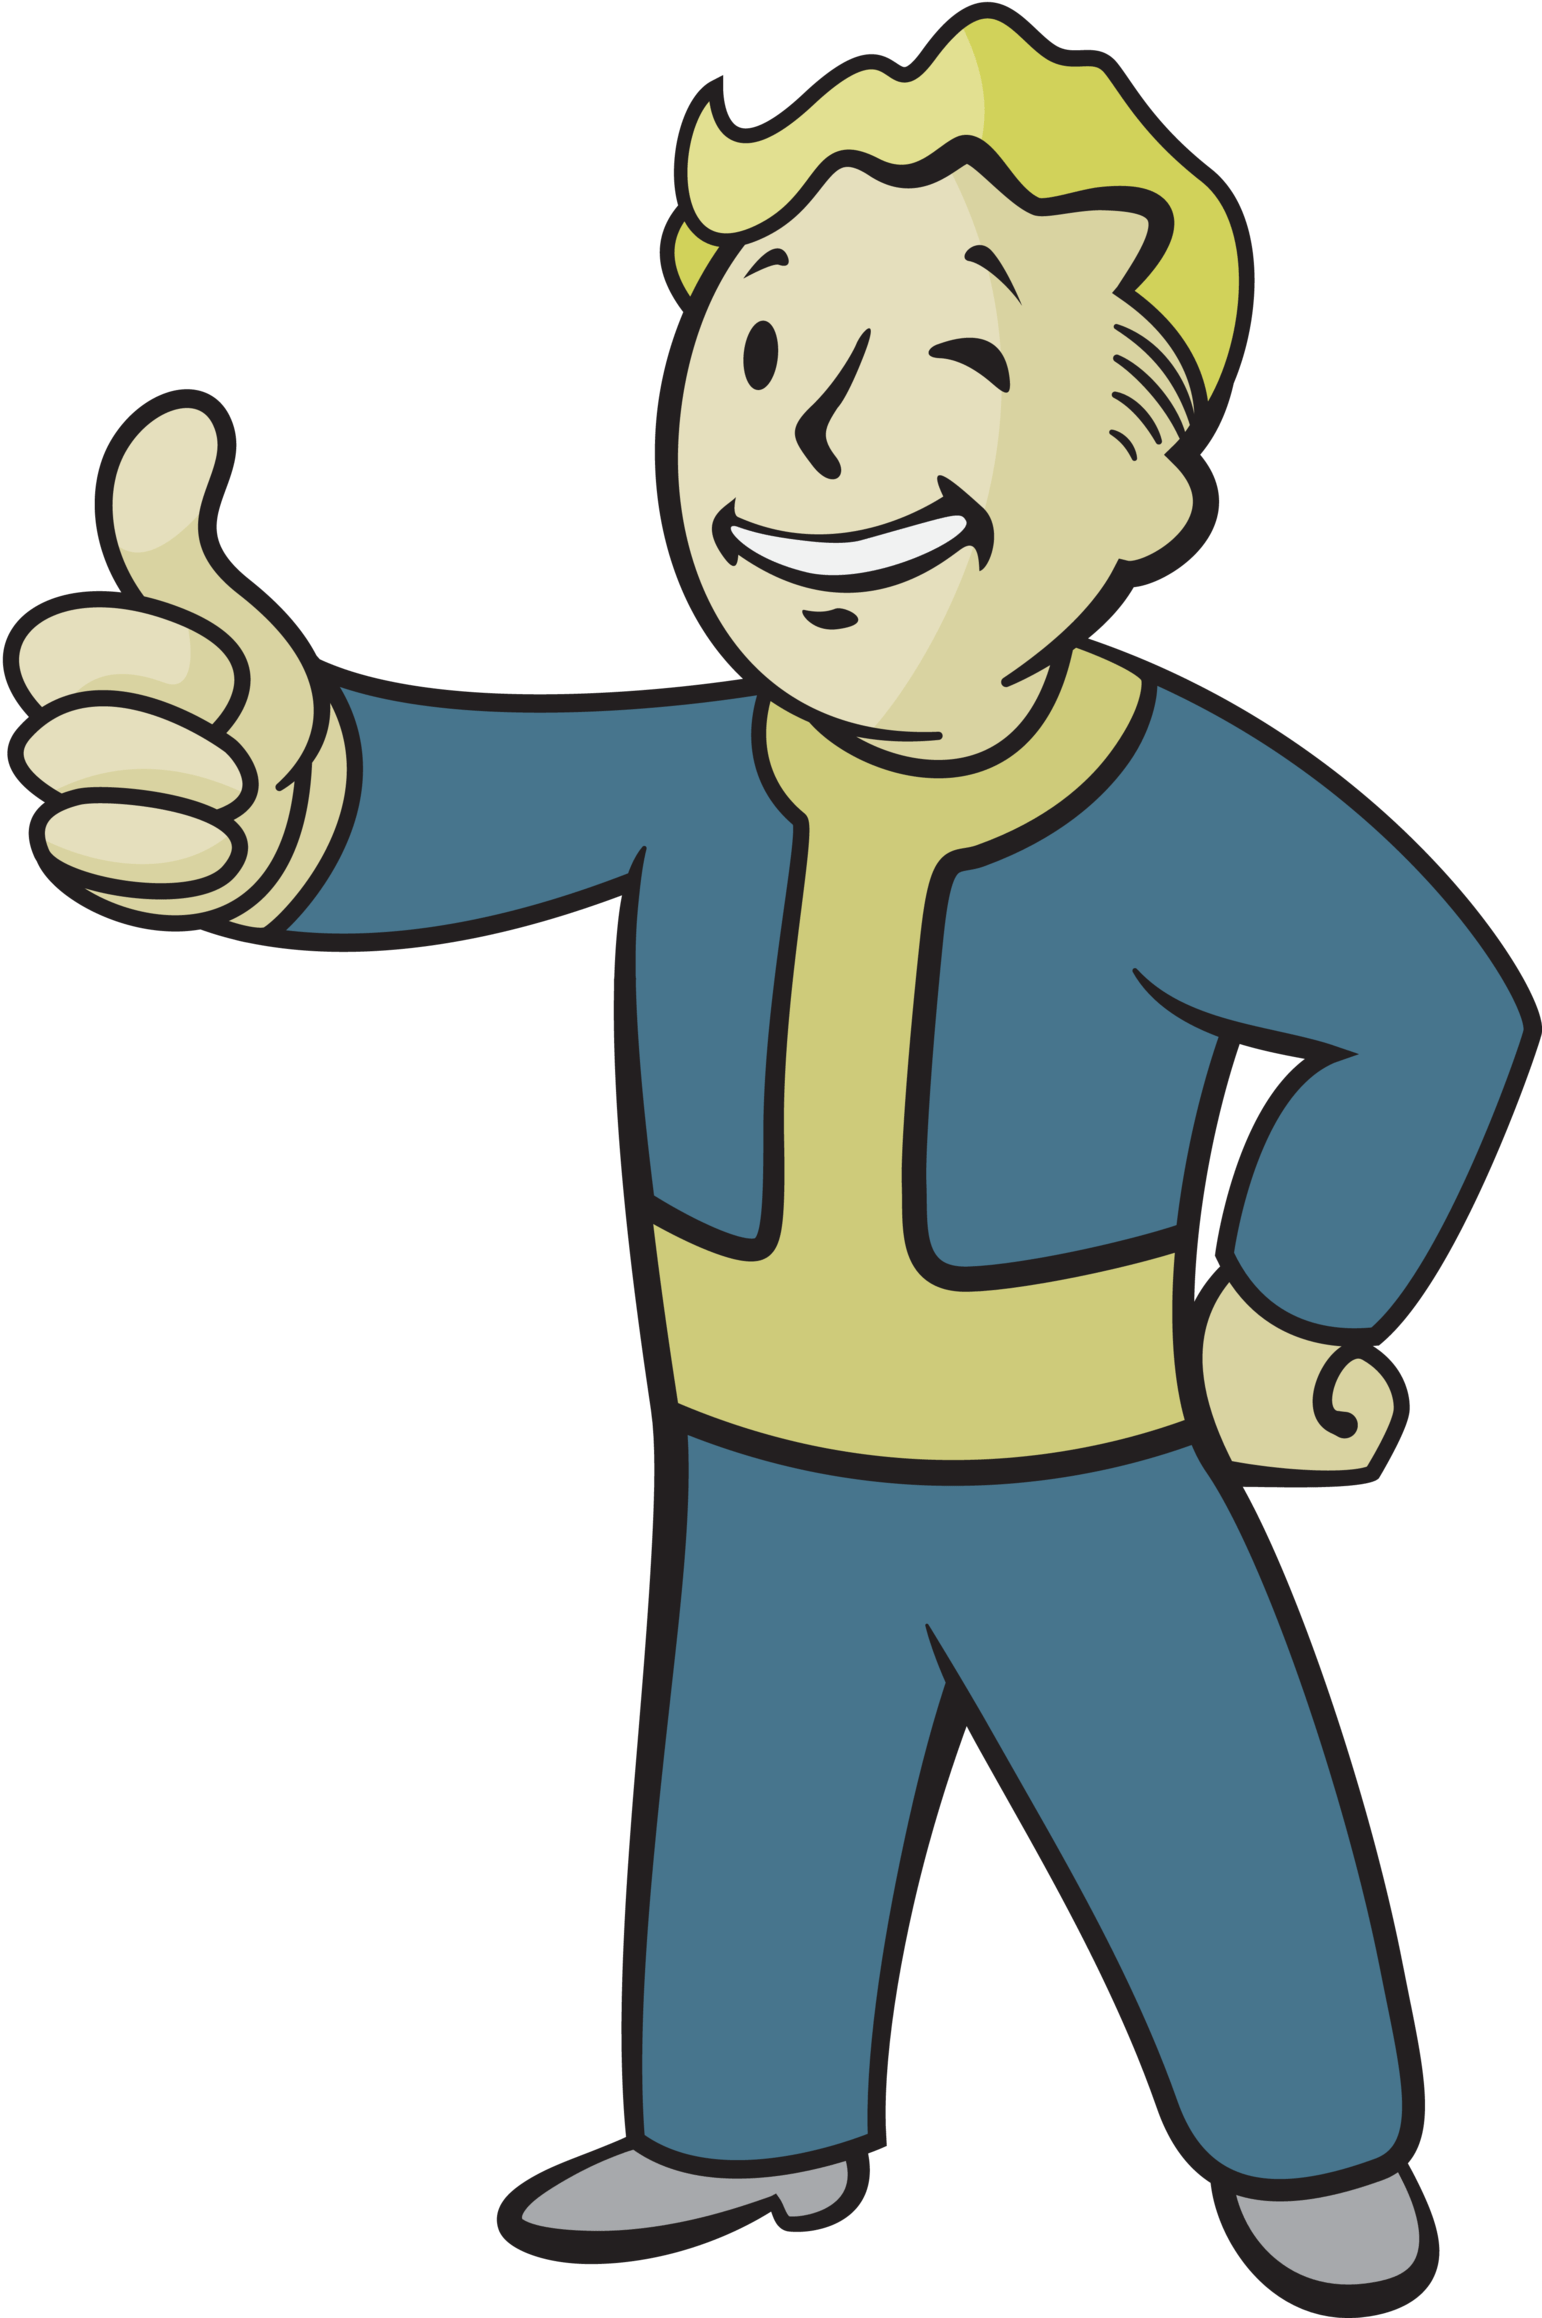 A Cartoon Of A Man Giving A Thumbs Up